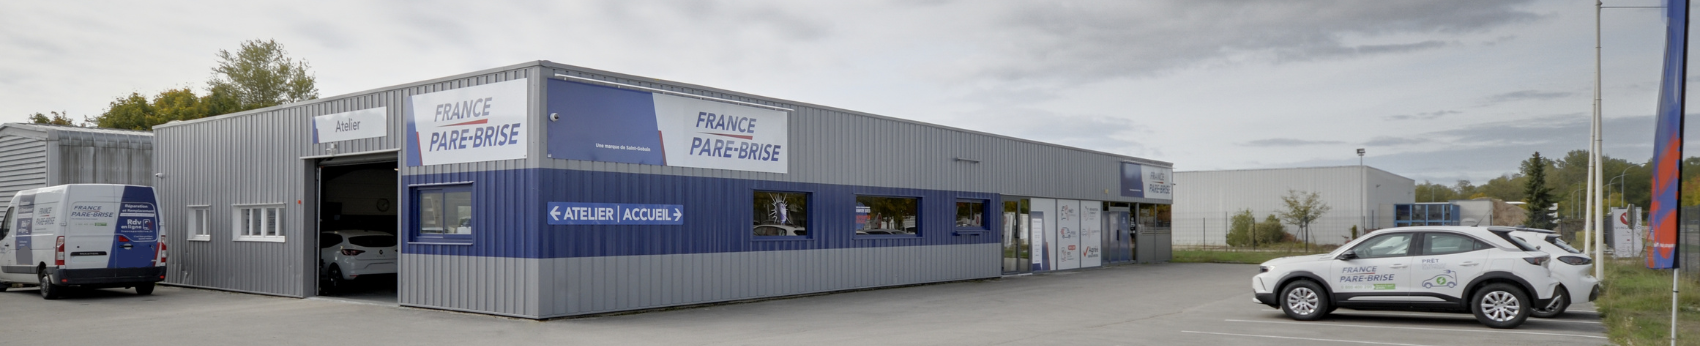 Banner-France-pare-brise